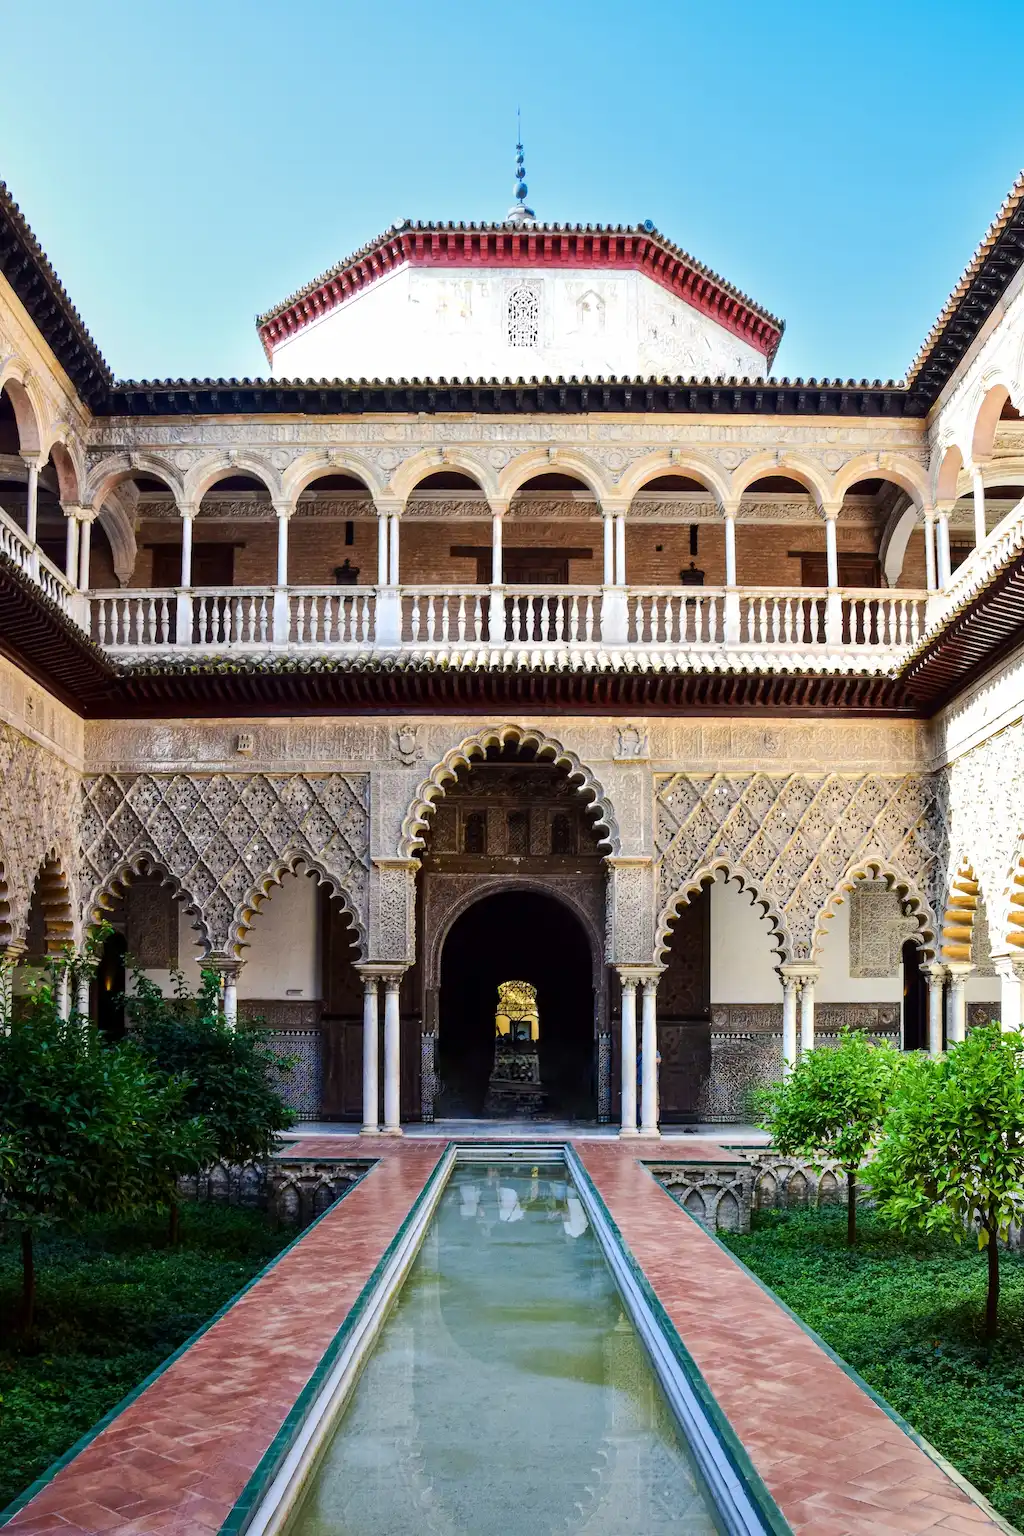 The Royal Alcazar of Seville